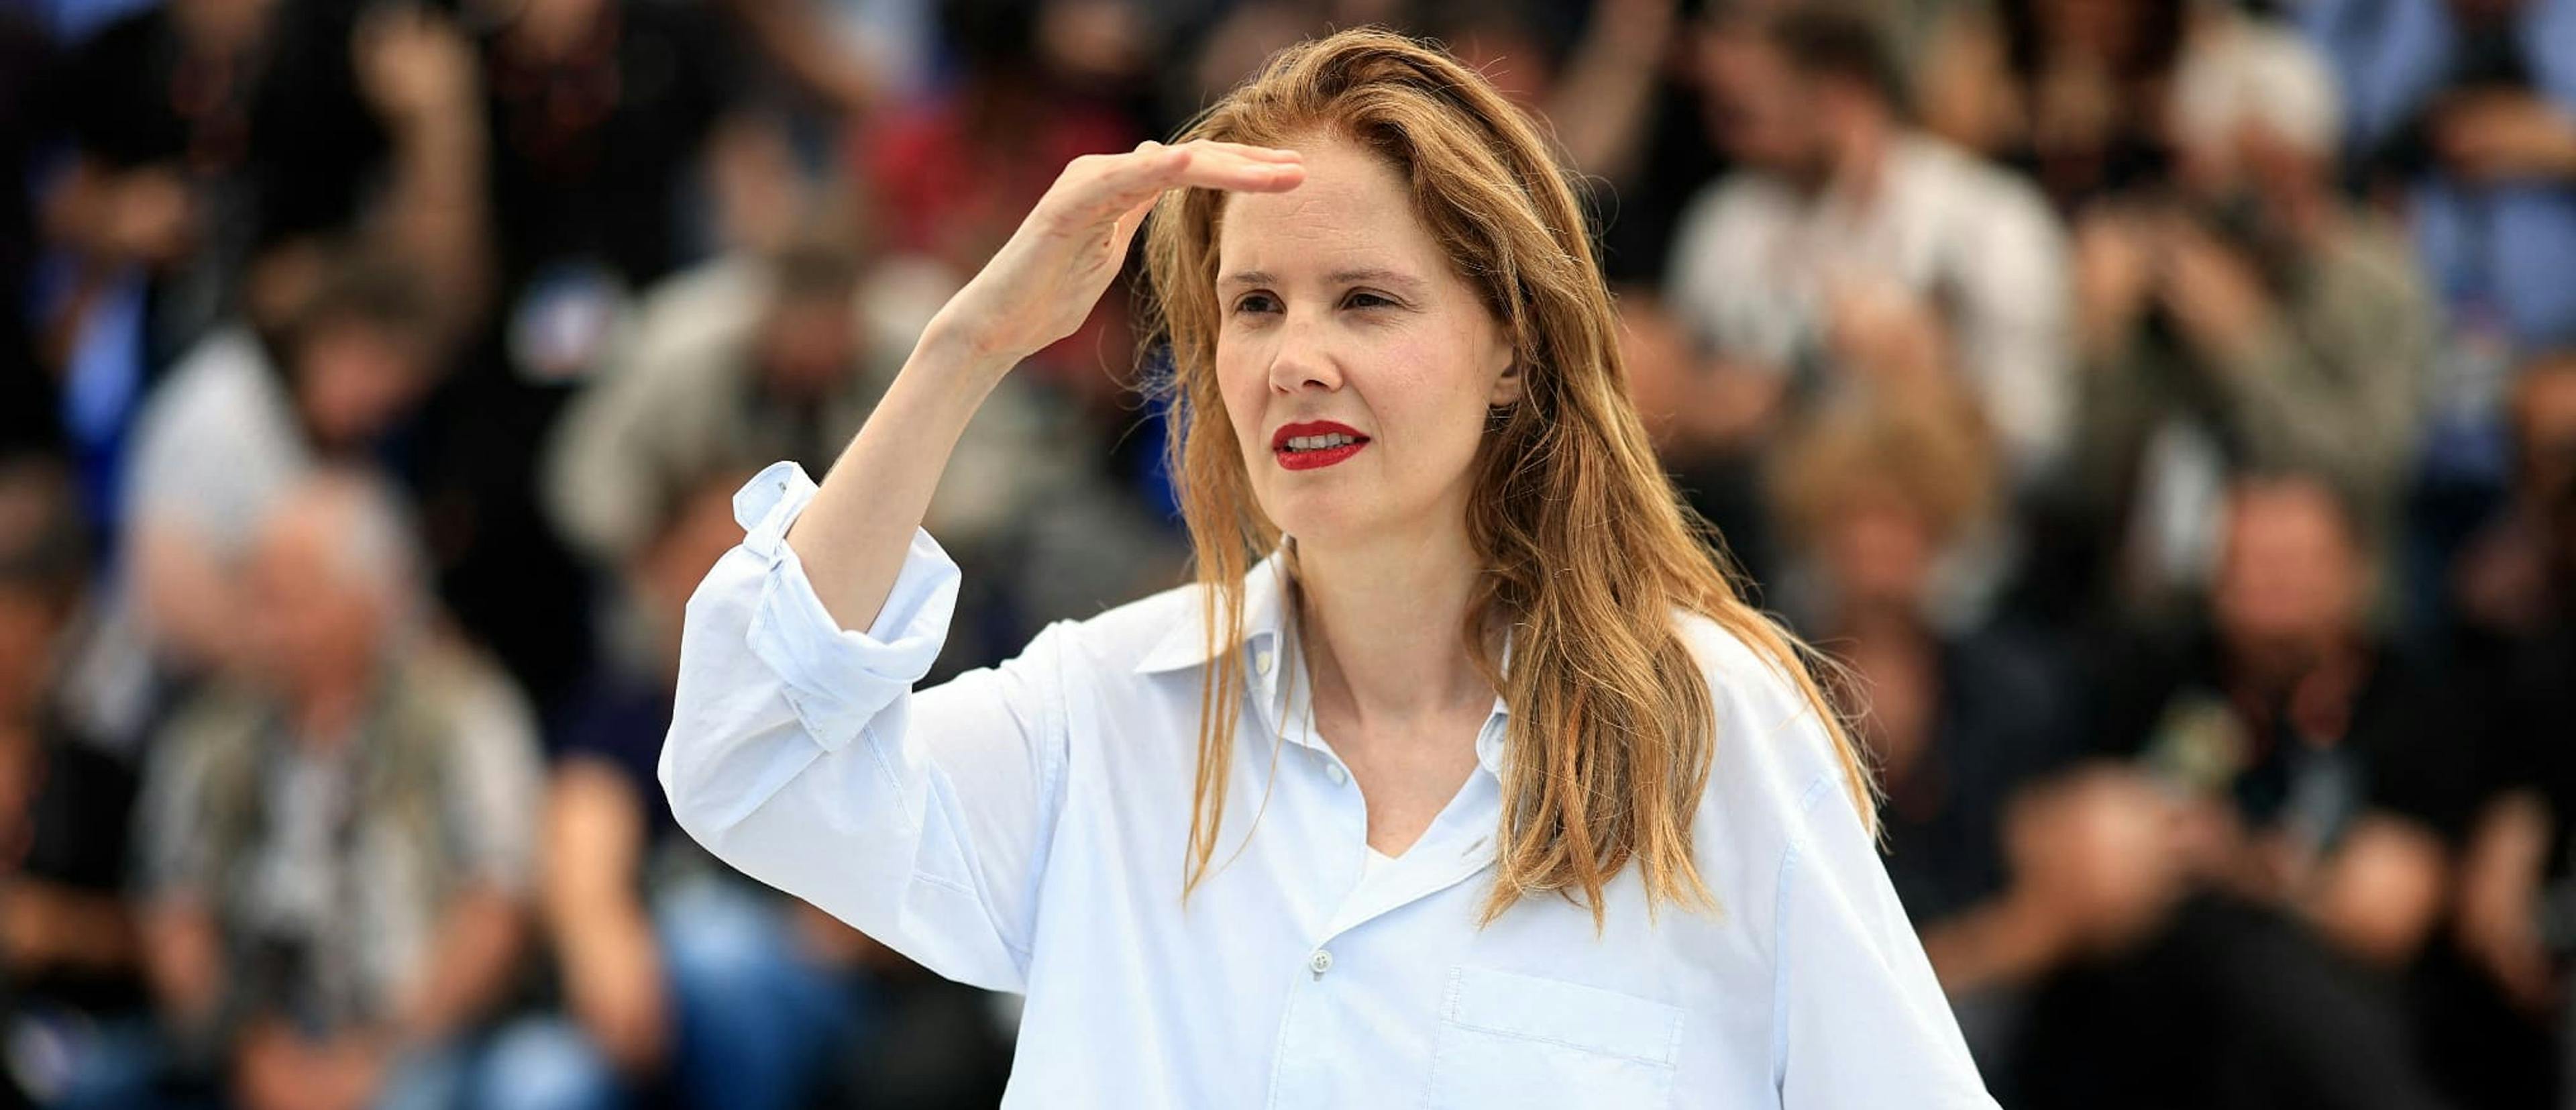 La directora francesa Justine Triet, en el Festival de Cannes